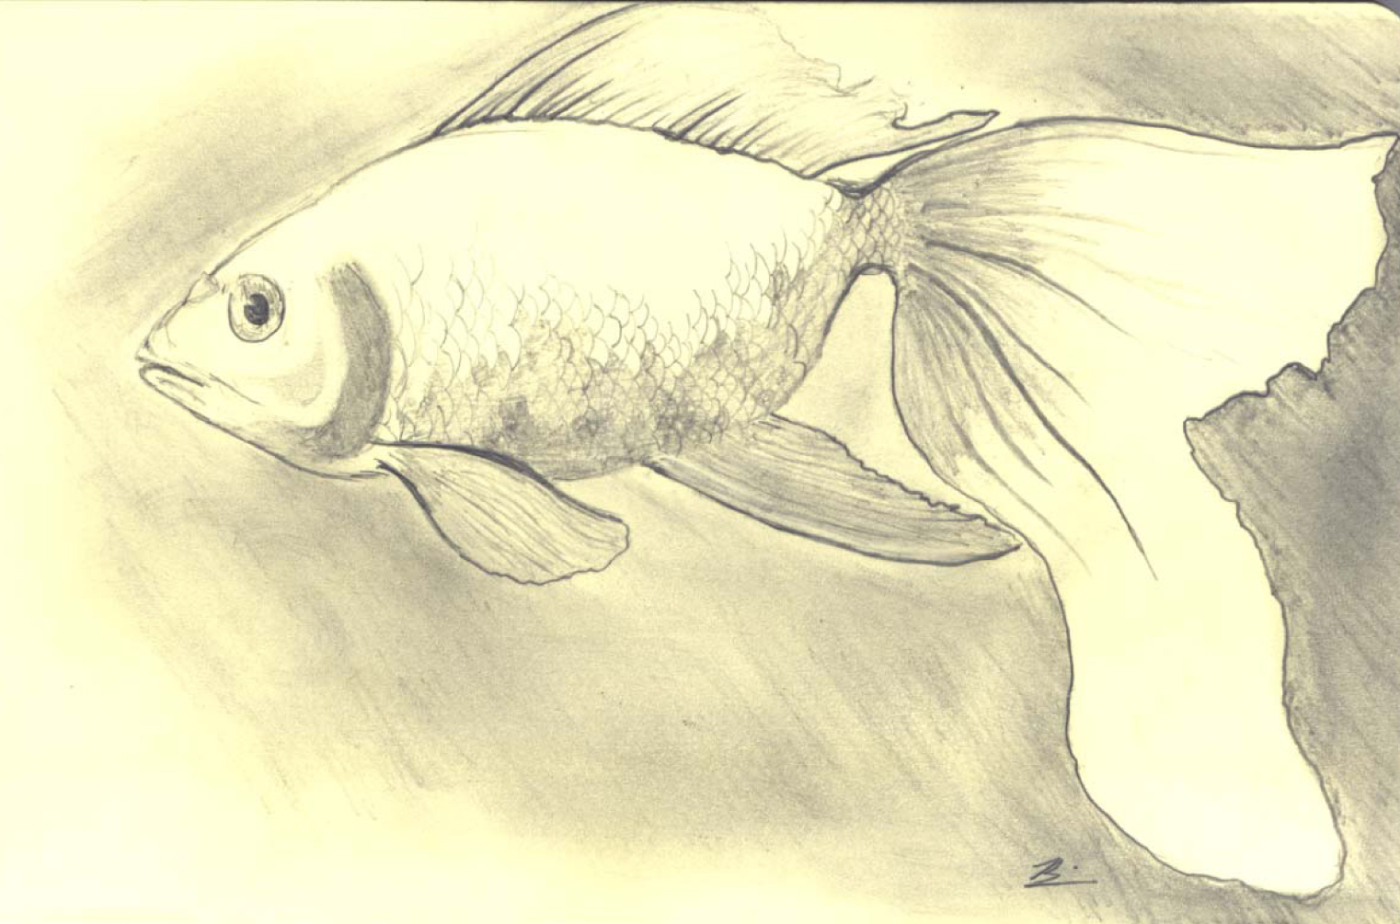 Sketch of a Fish